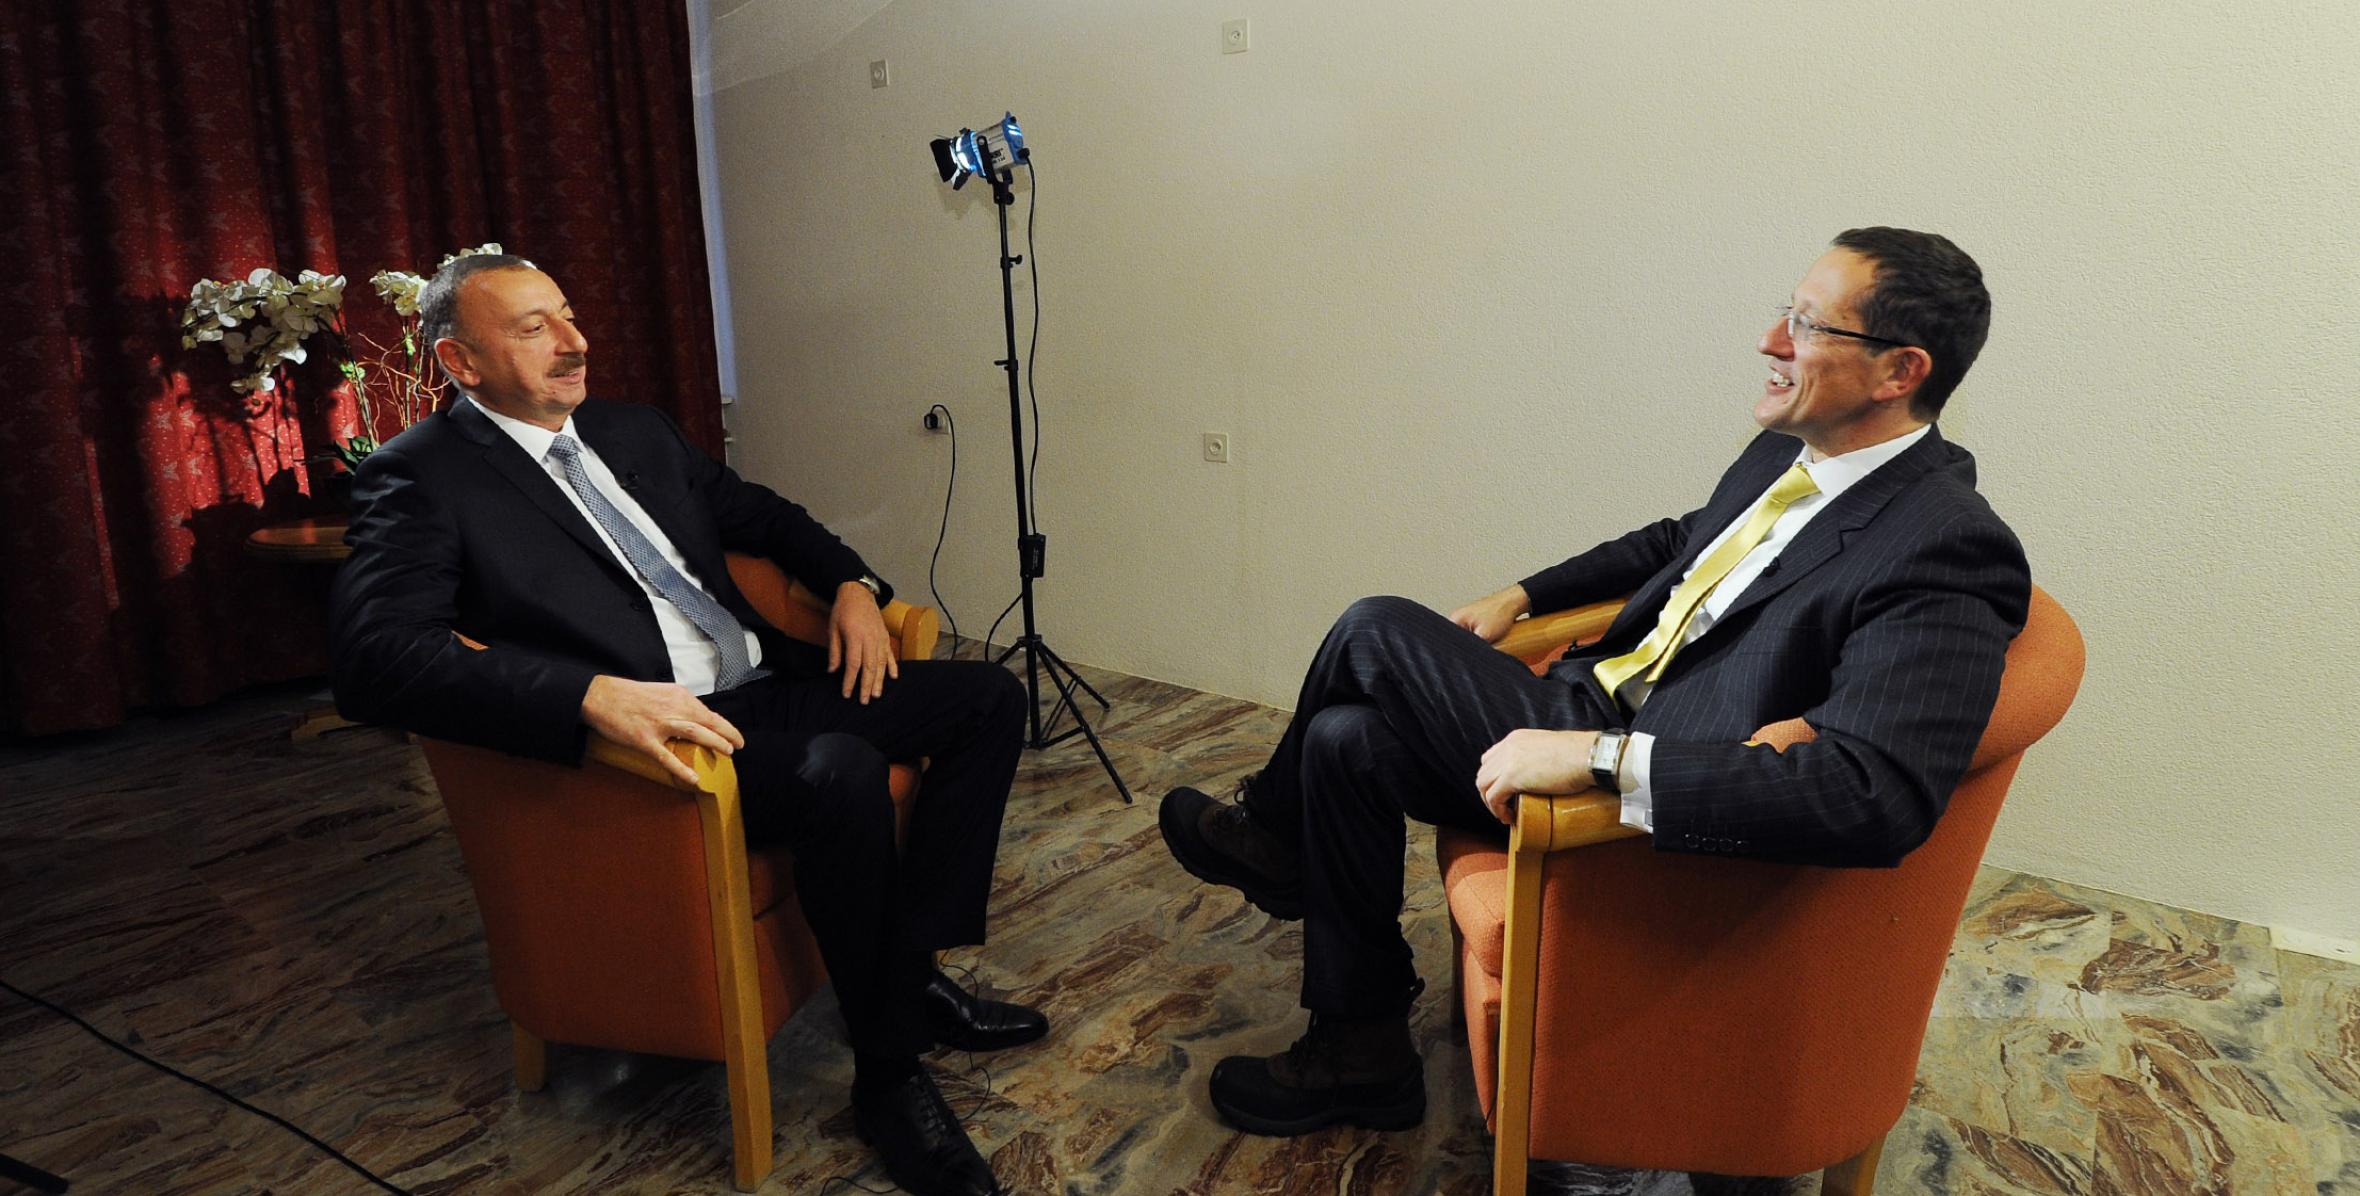 Ильхам Алиев дал интервью телеканалу CNN